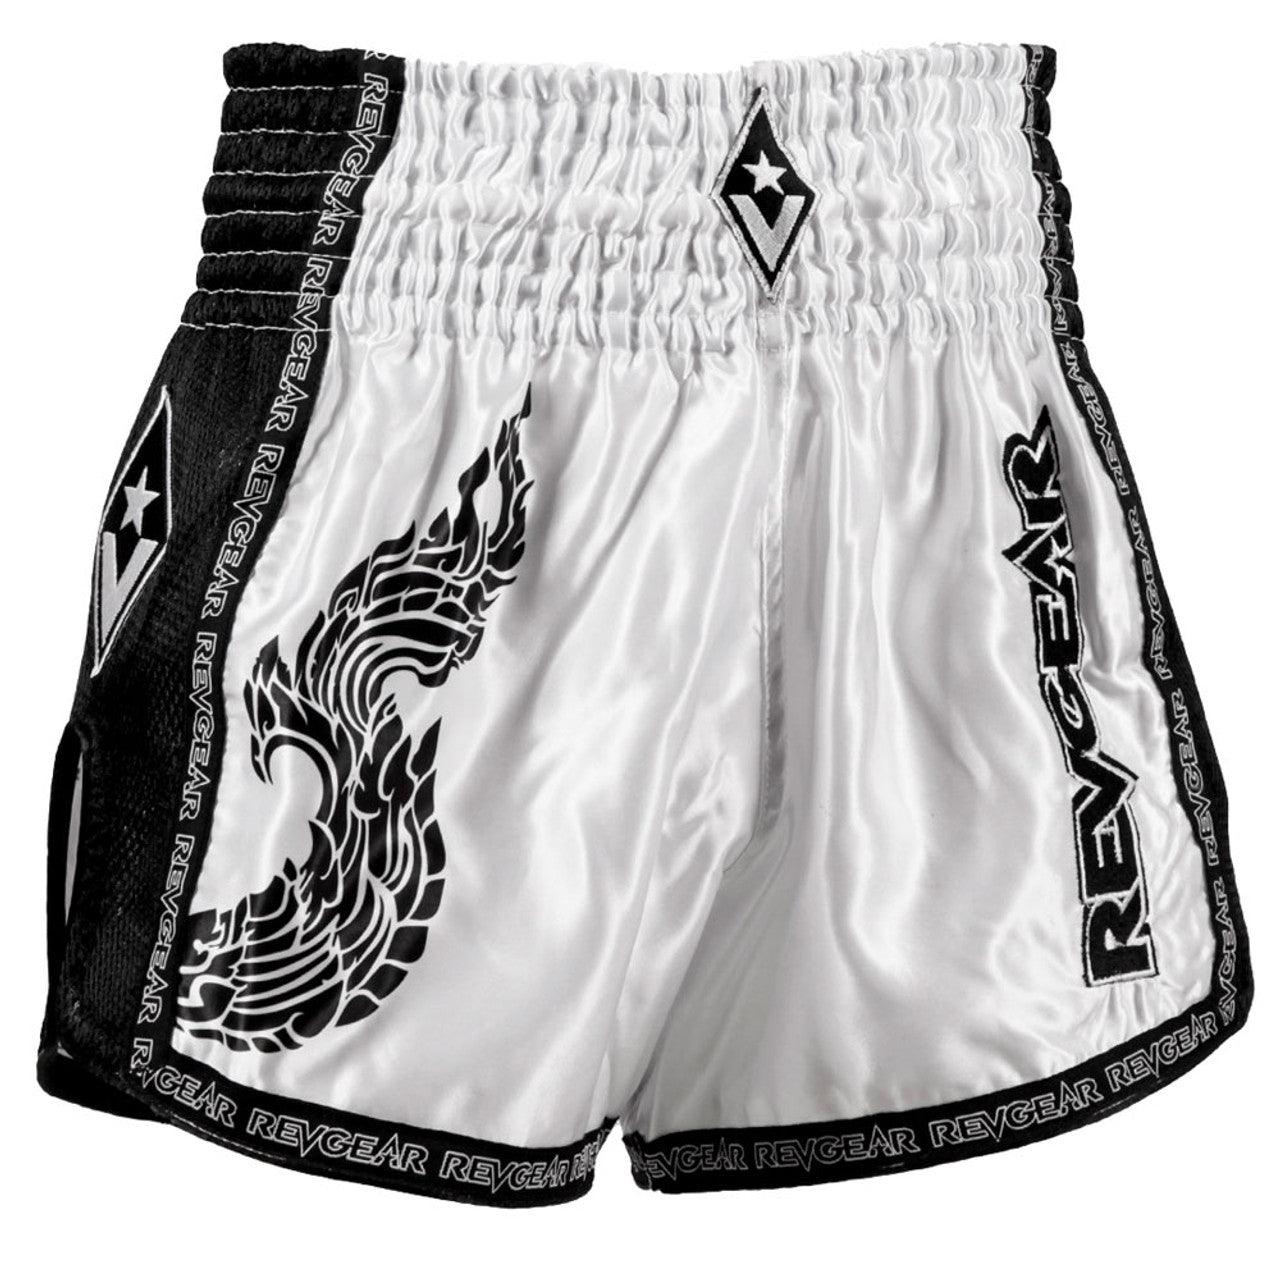 Legends Thai Shorts - Valhalla - White / Black - Violent Art Shop